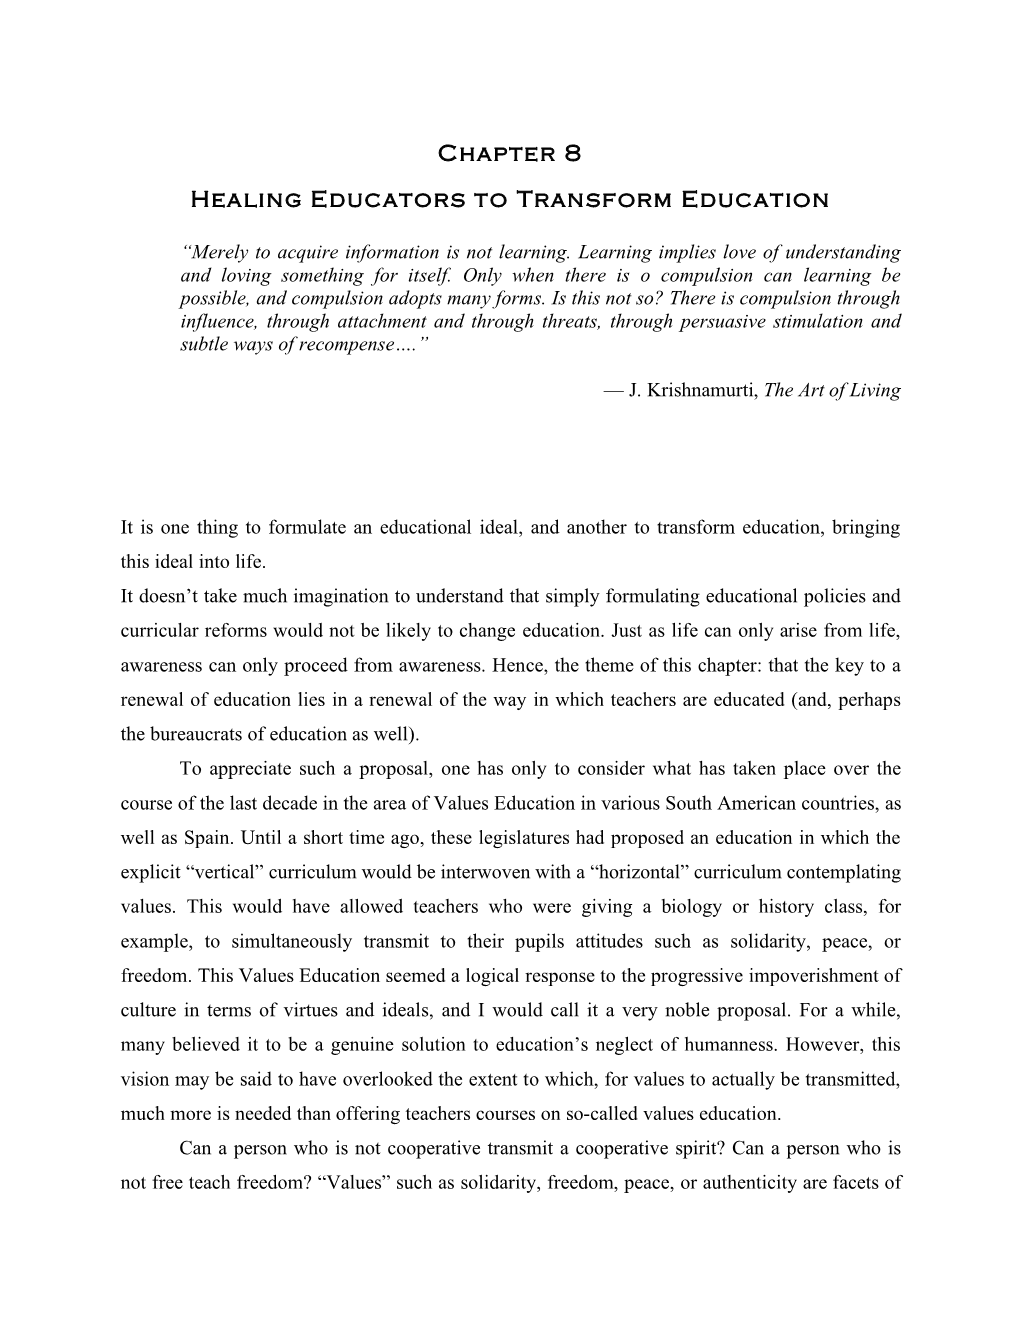 Chapter 8 Healing Educators to Transform Education